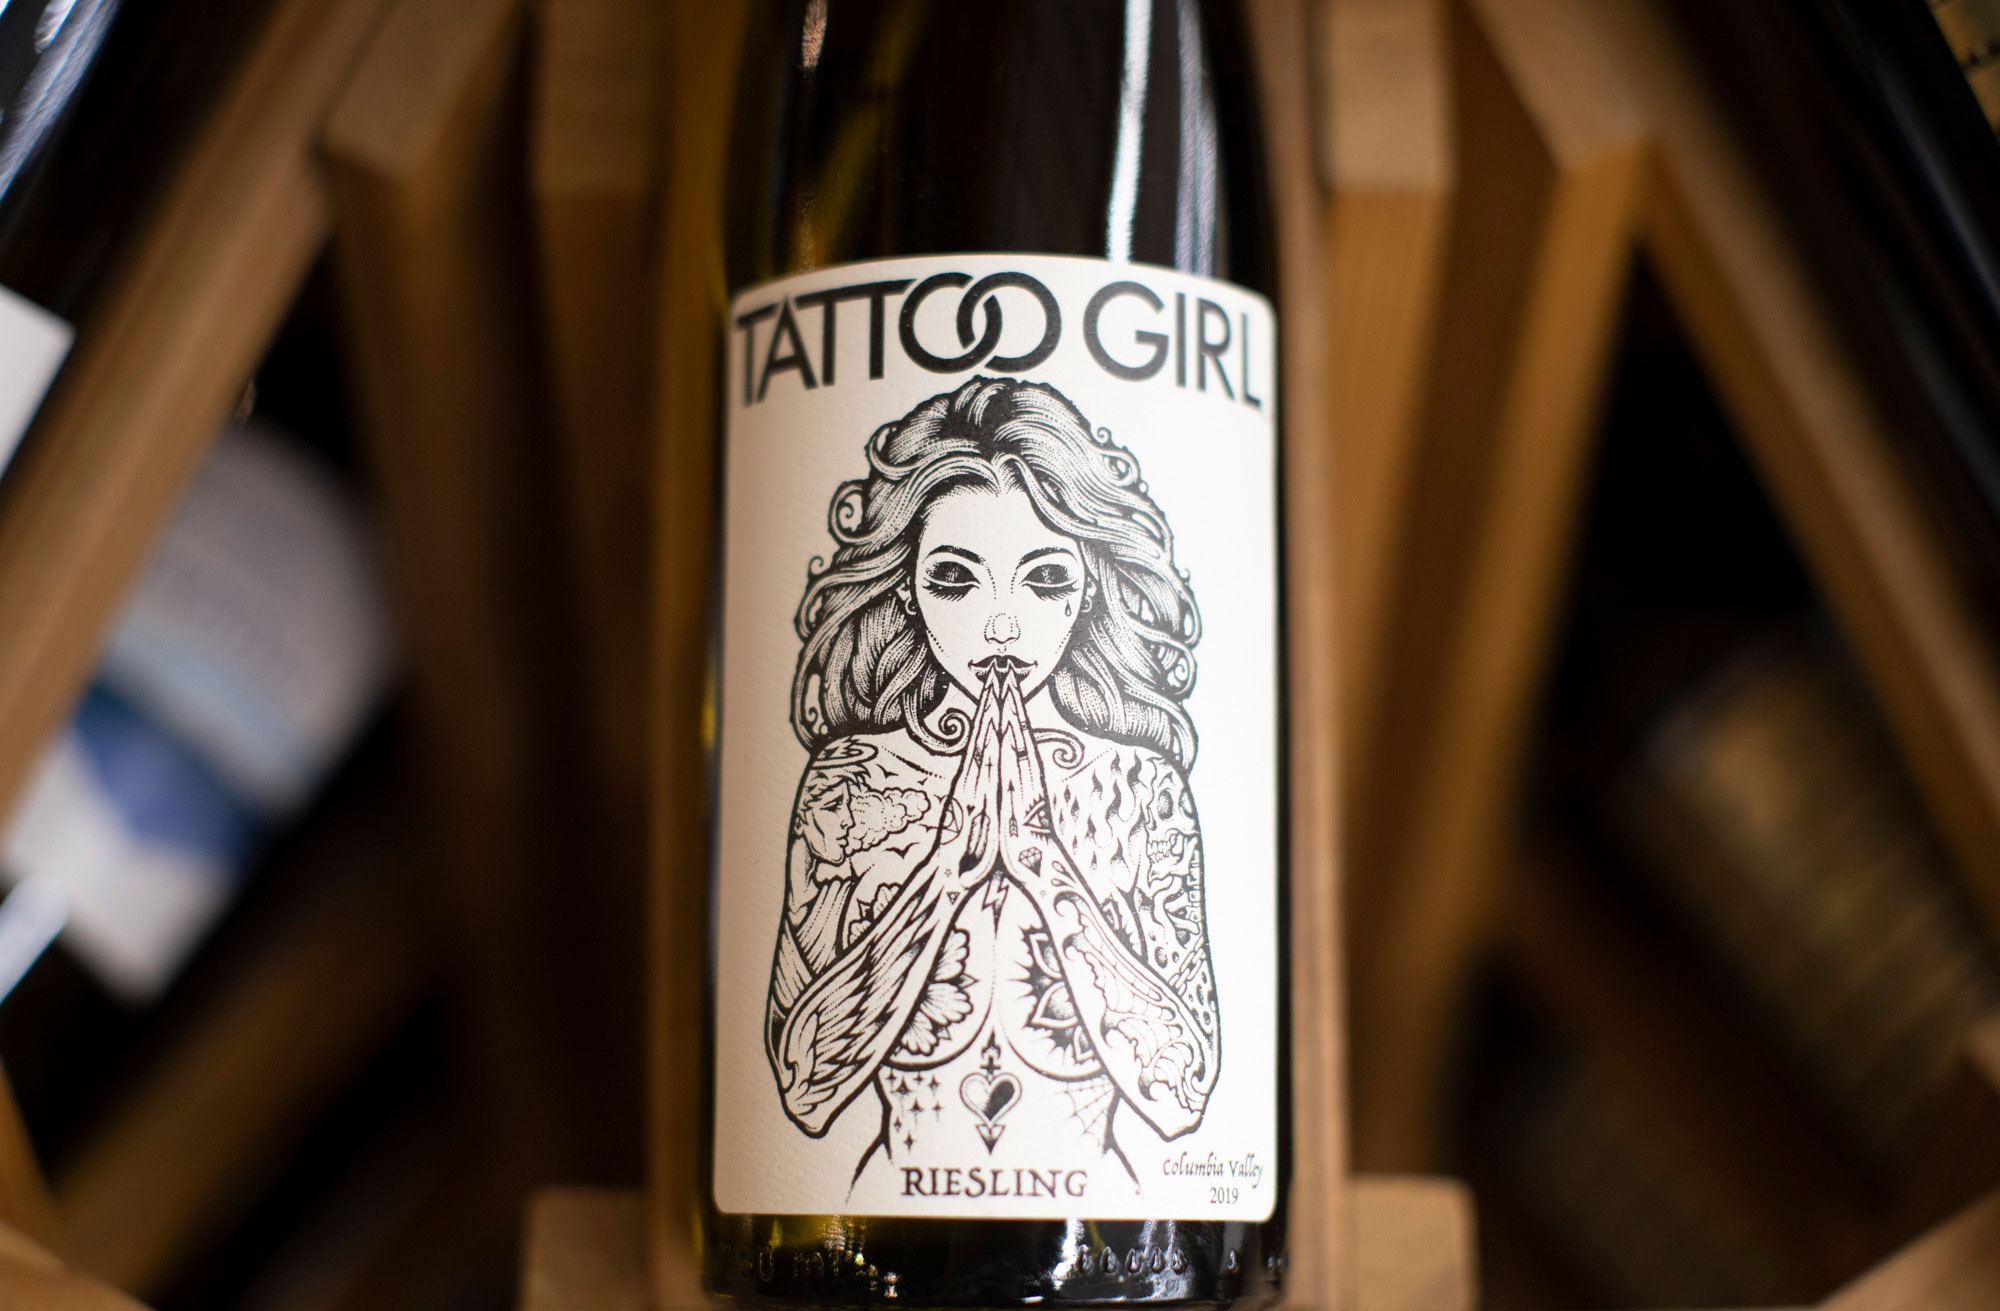 tattoo girl wine bottle